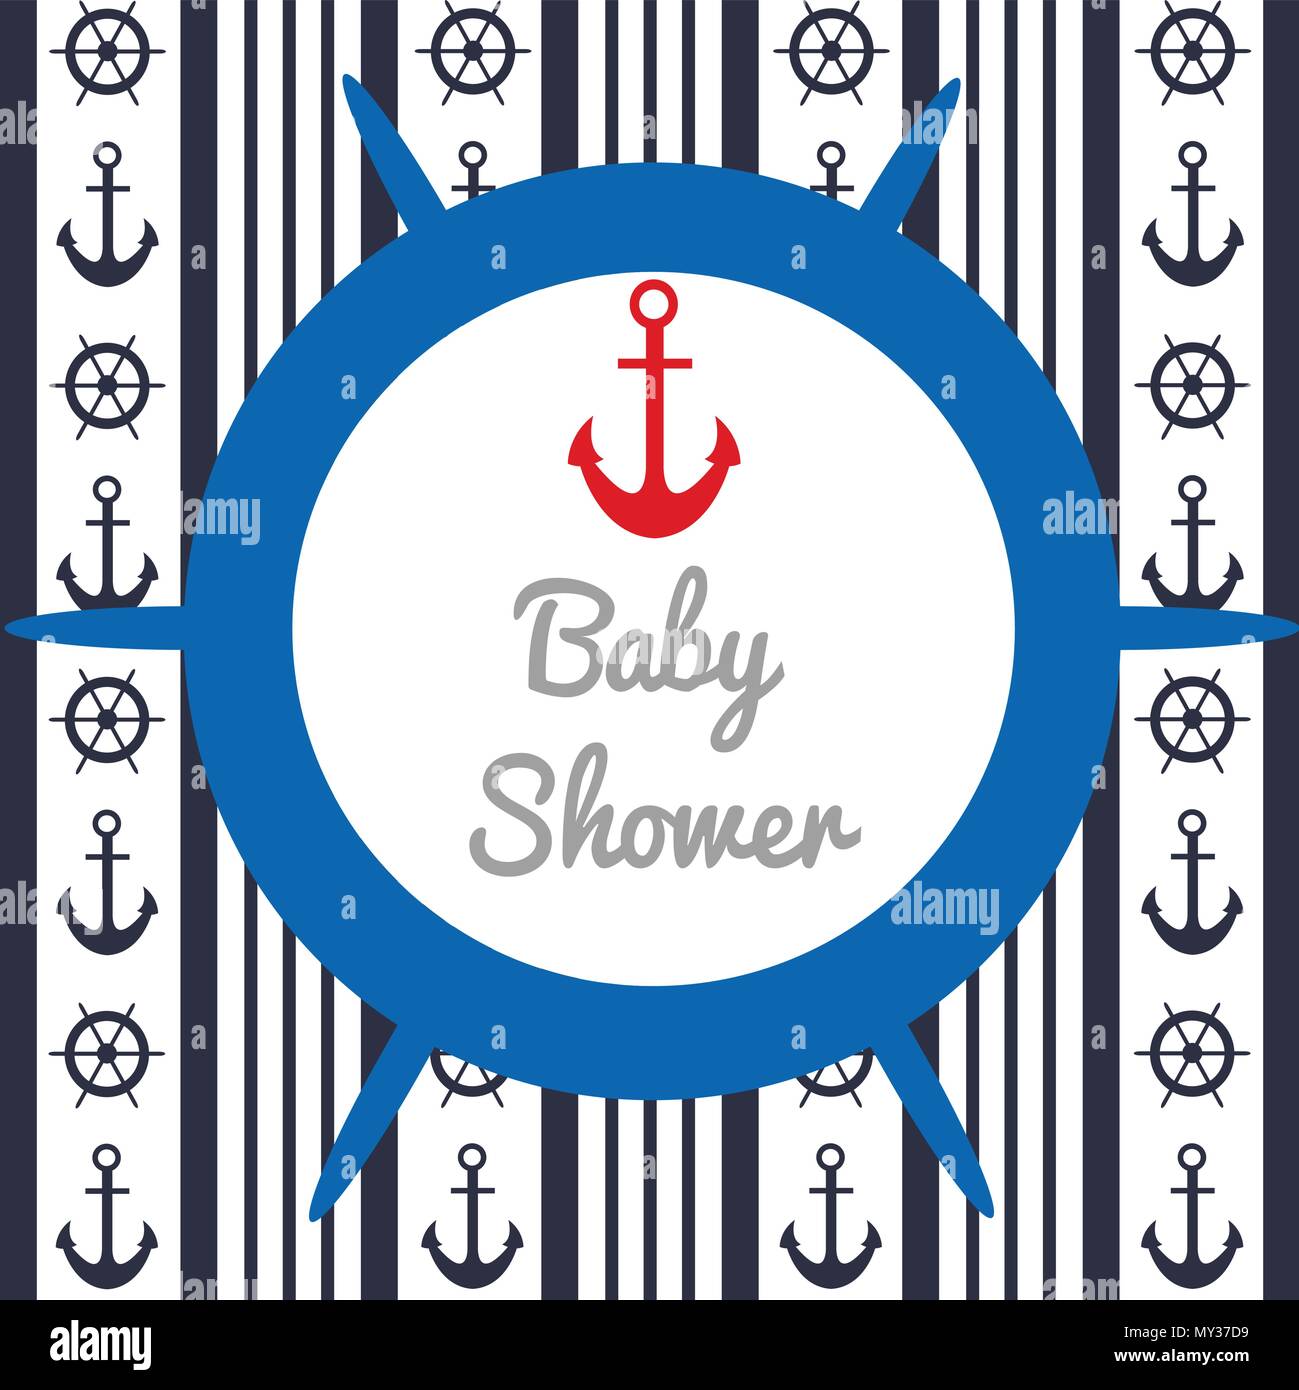 baby shower invitation design Stock Vector